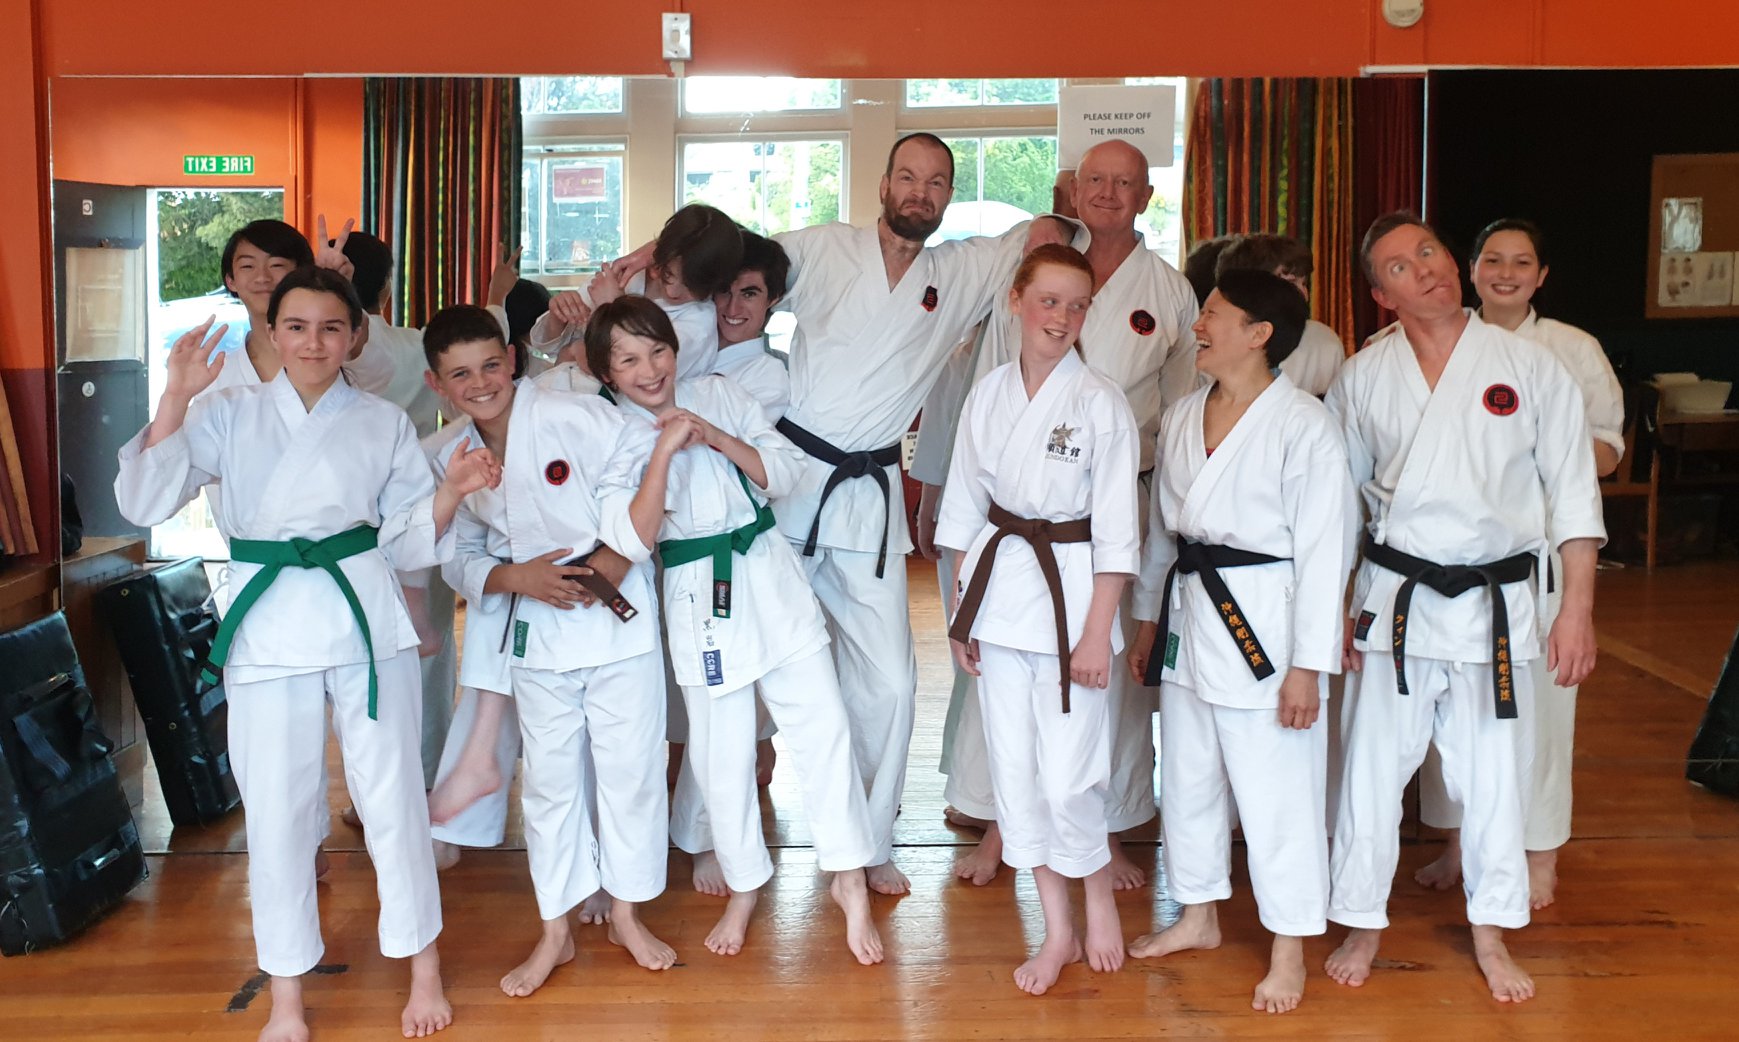 Queenstown Karate Club